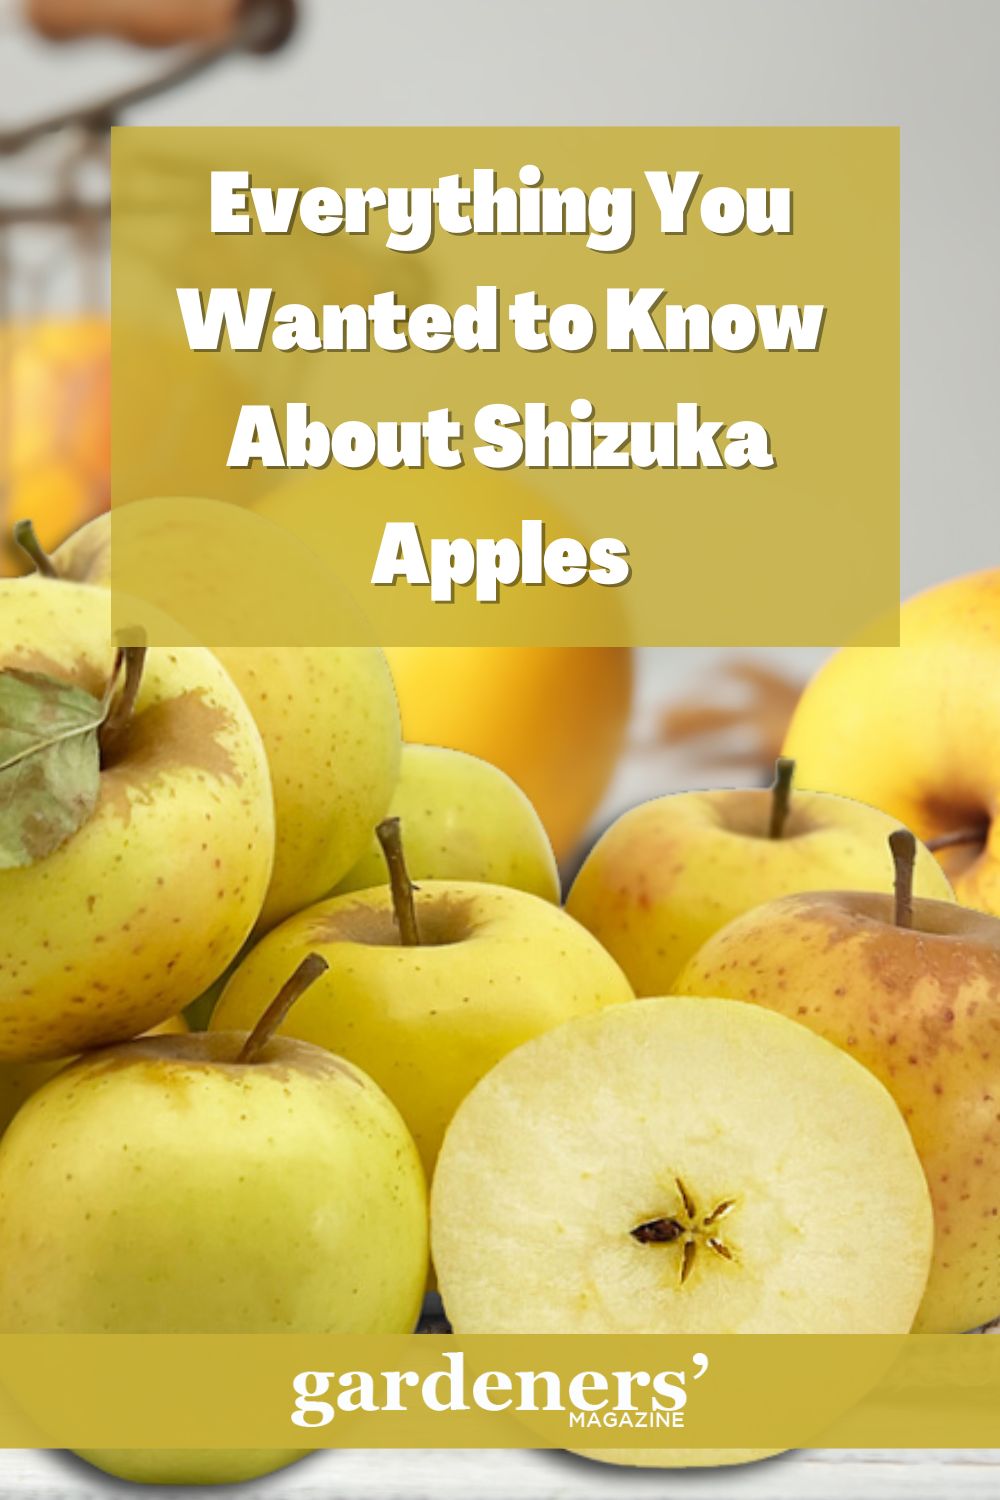 Fresh Shizuka apples on display